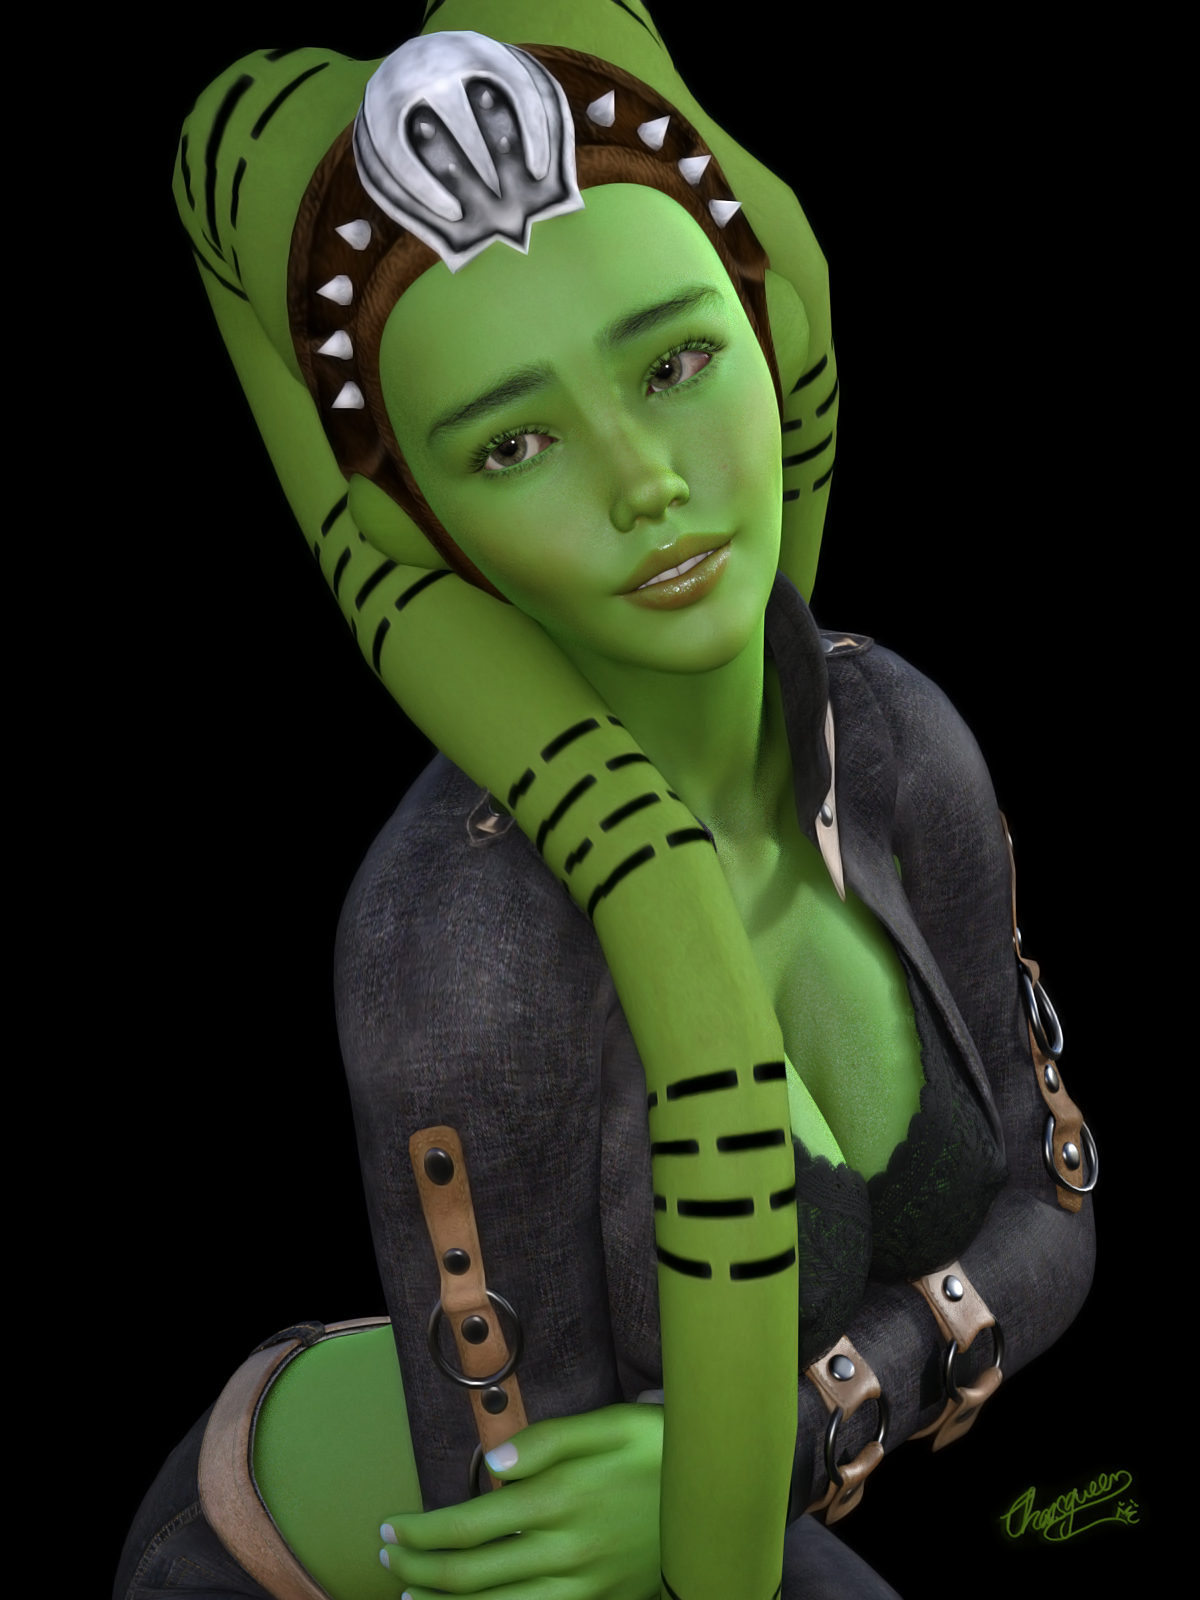 General 1200x1600 green skin Twi'lek Star Wars women cleavage skimpy clothes looking at viewer